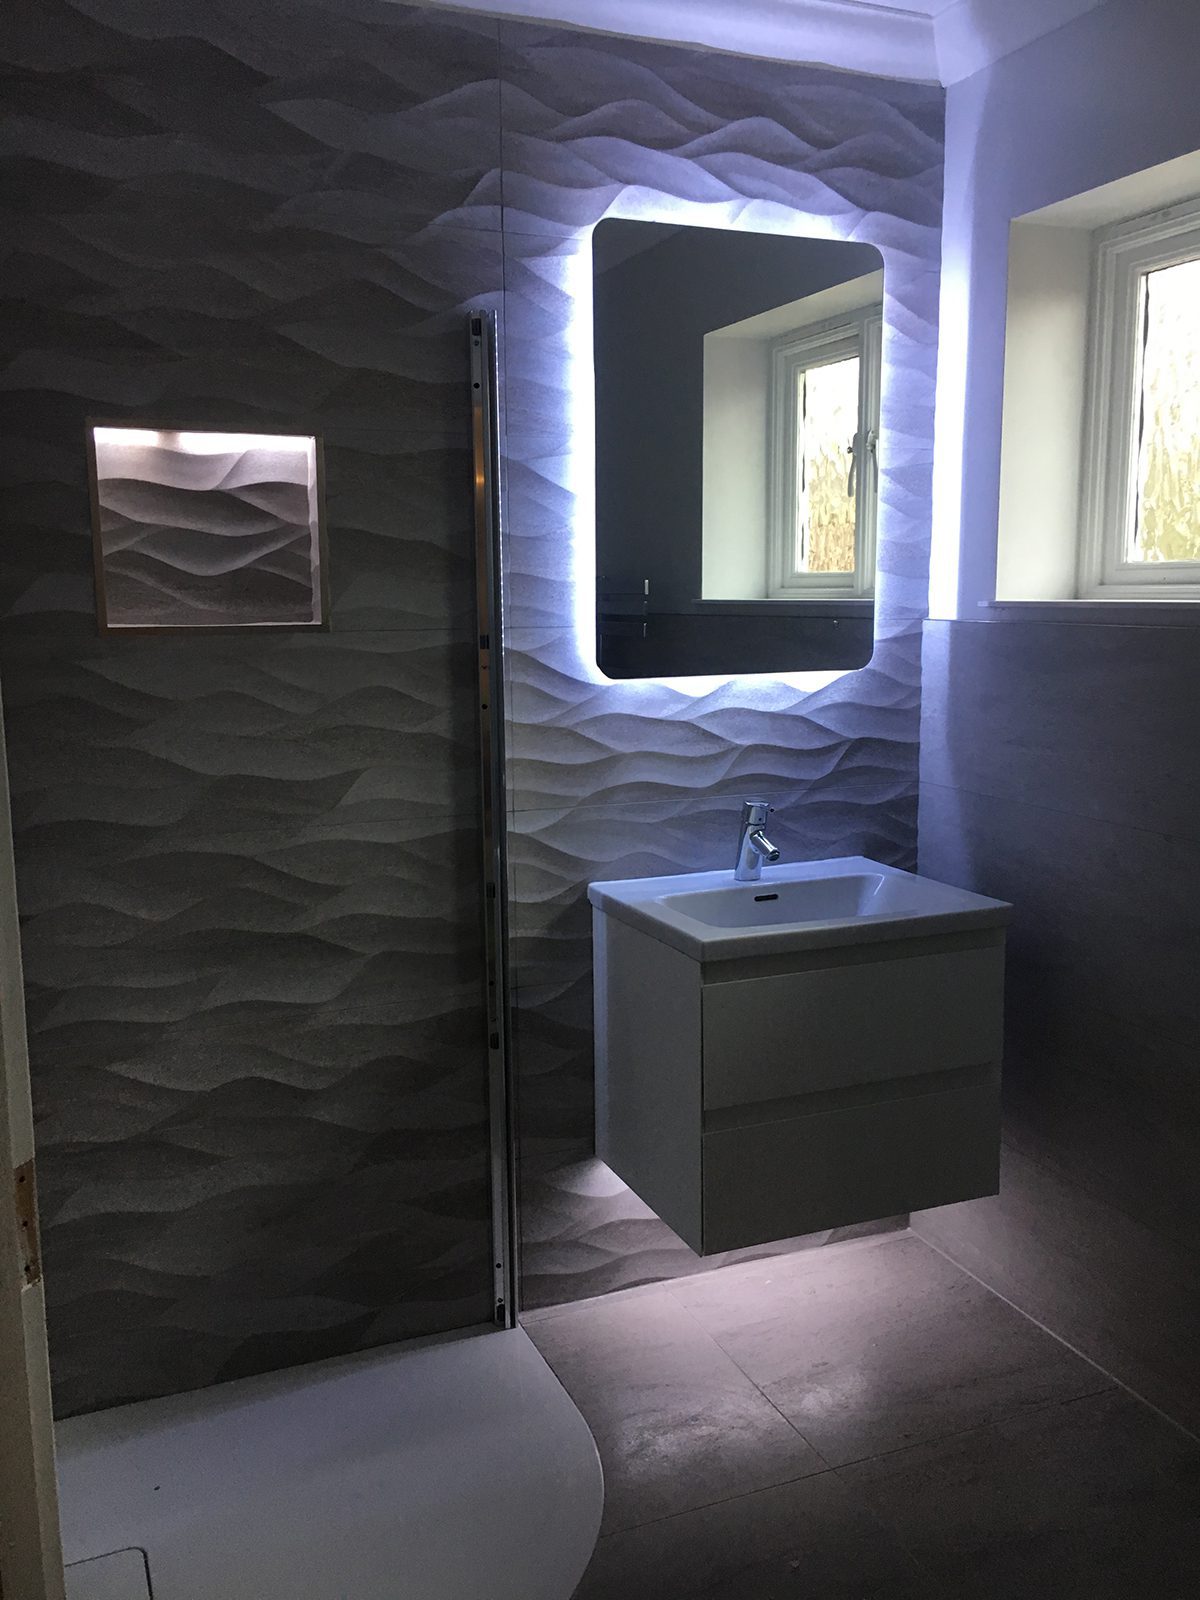 The Cambridge Bath Co bathroom mirror and sink with lighting